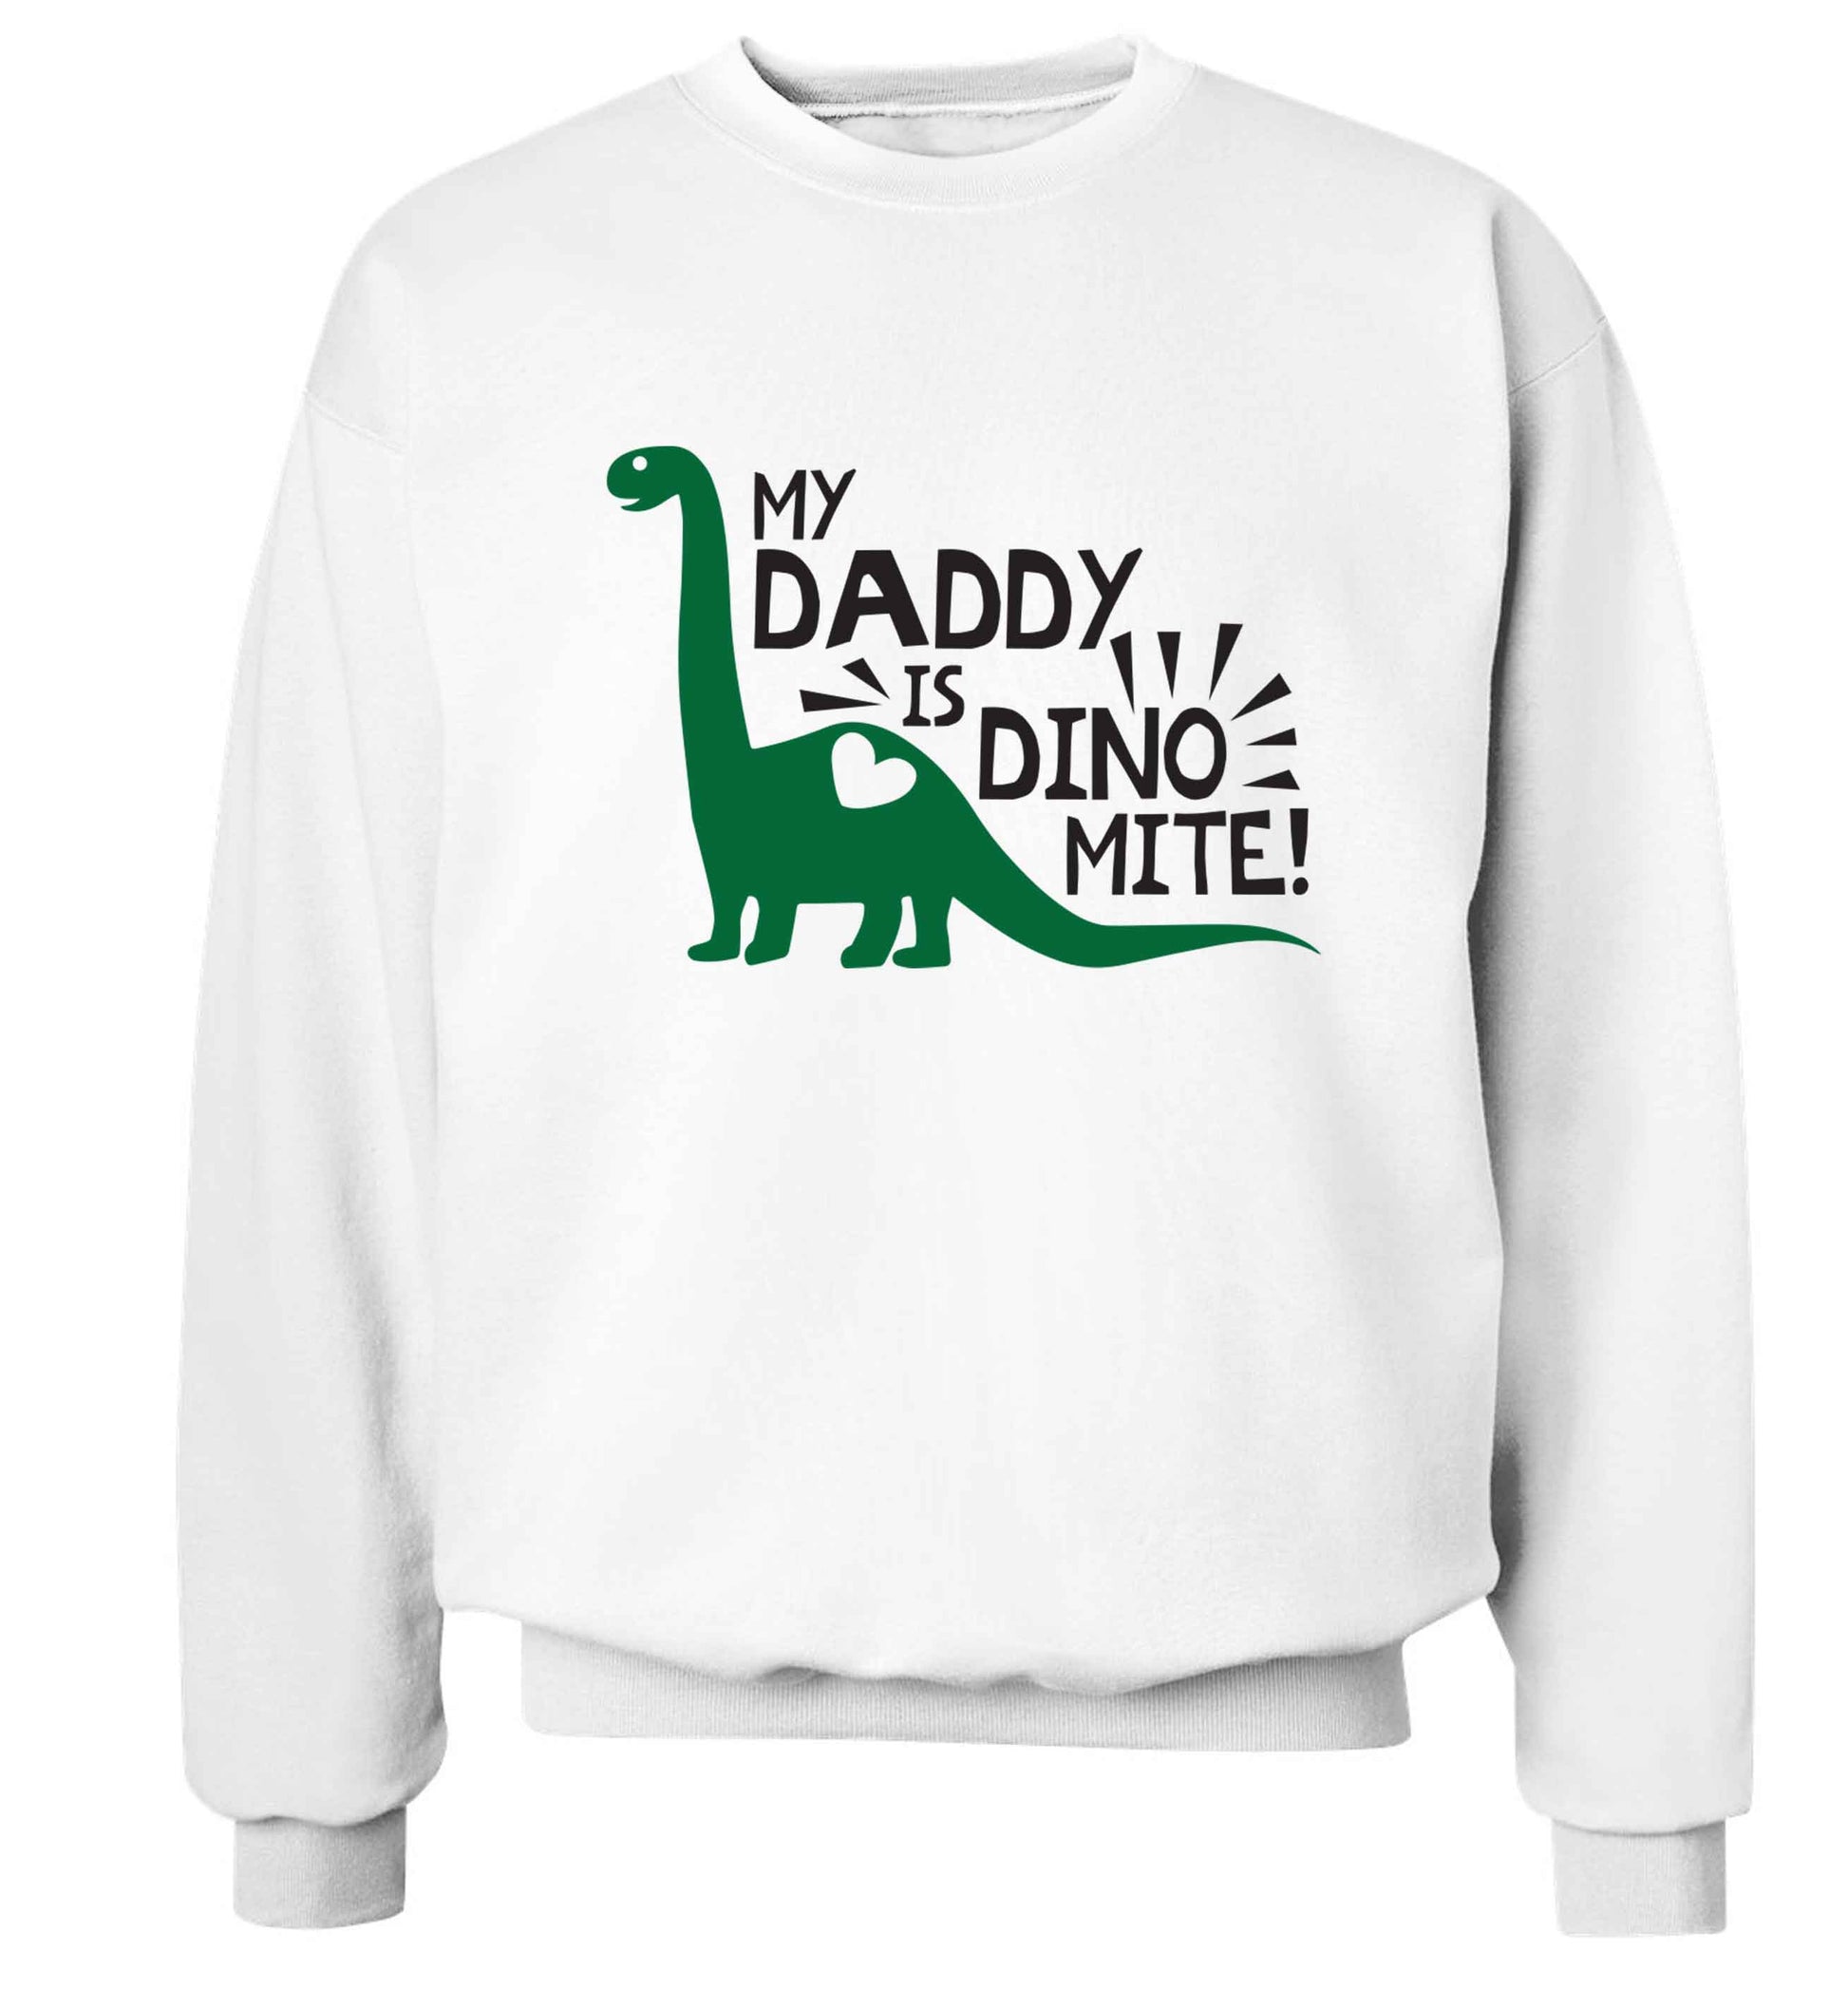 My daddy is dinomite! Adult's unisex white Sweater 2XL